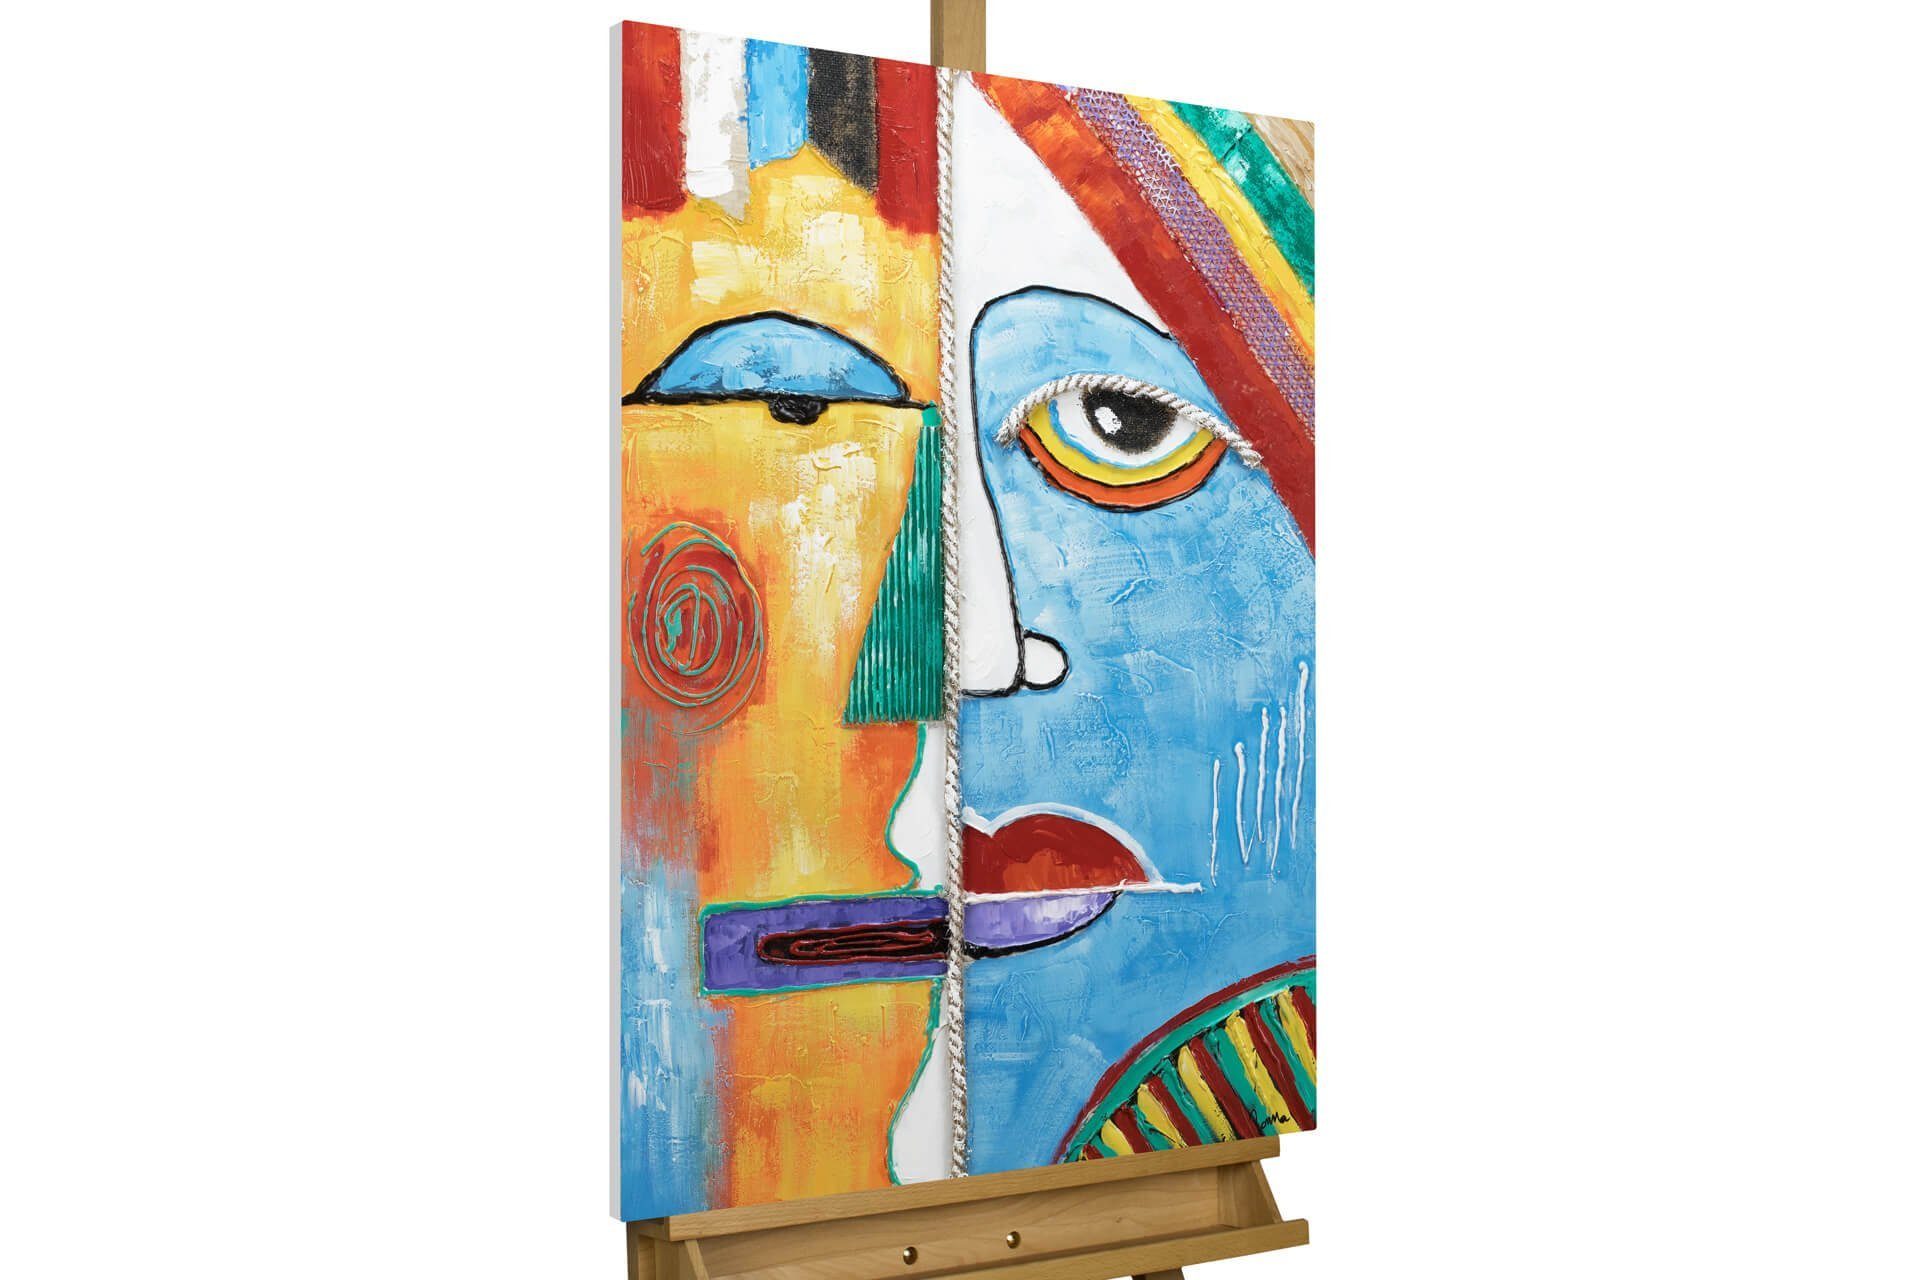 KUNSTLOFT Gemälde Two Faces 60x90 cm, Leinwandbild 100% HANDGEMALT Wandbild Wohnzimmer